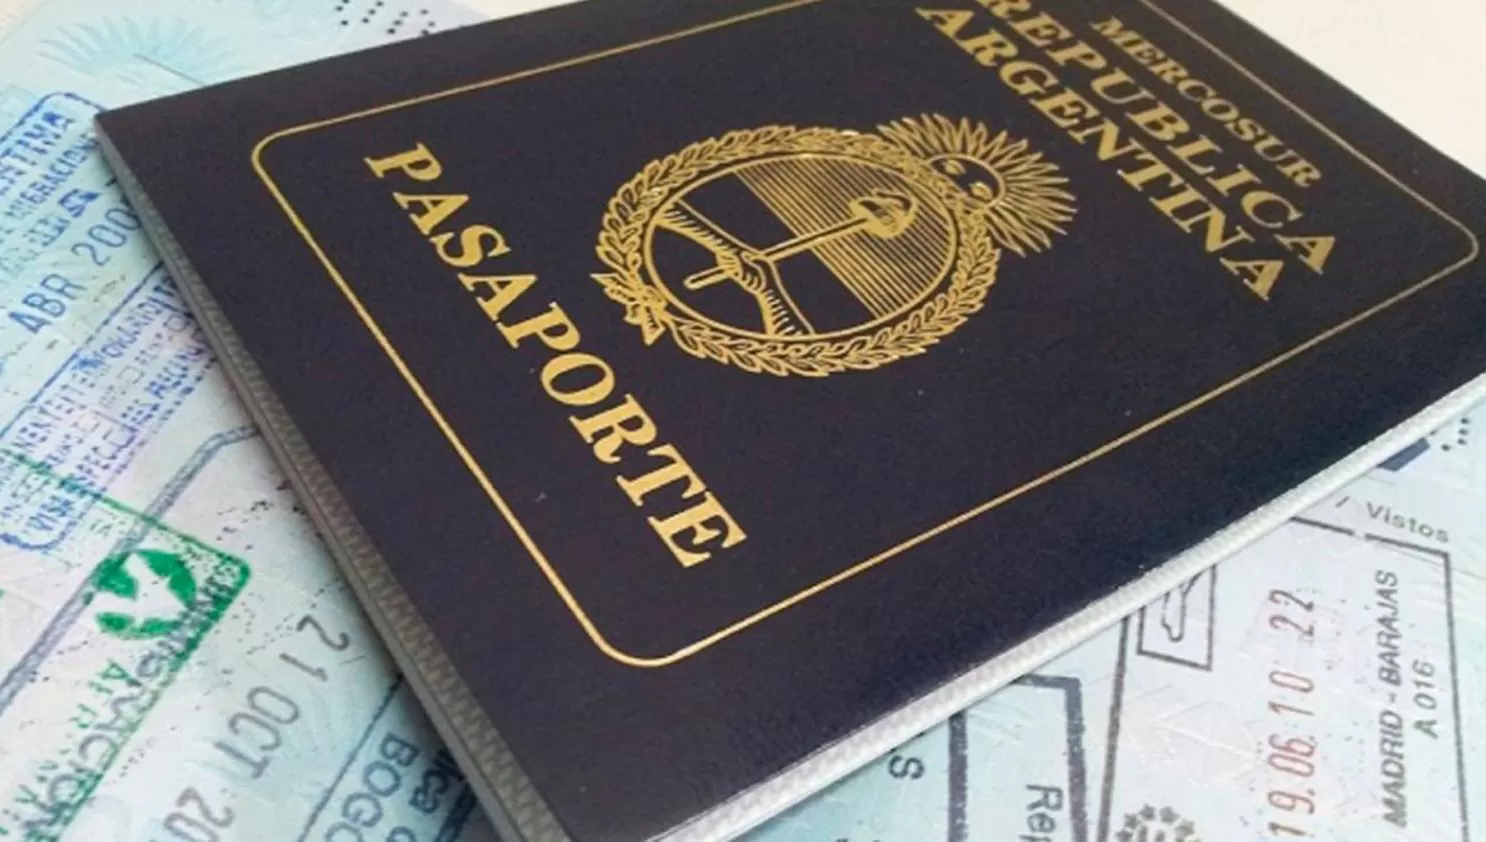 Pasaporte argentino. LA GACETA / ARCHIVO.